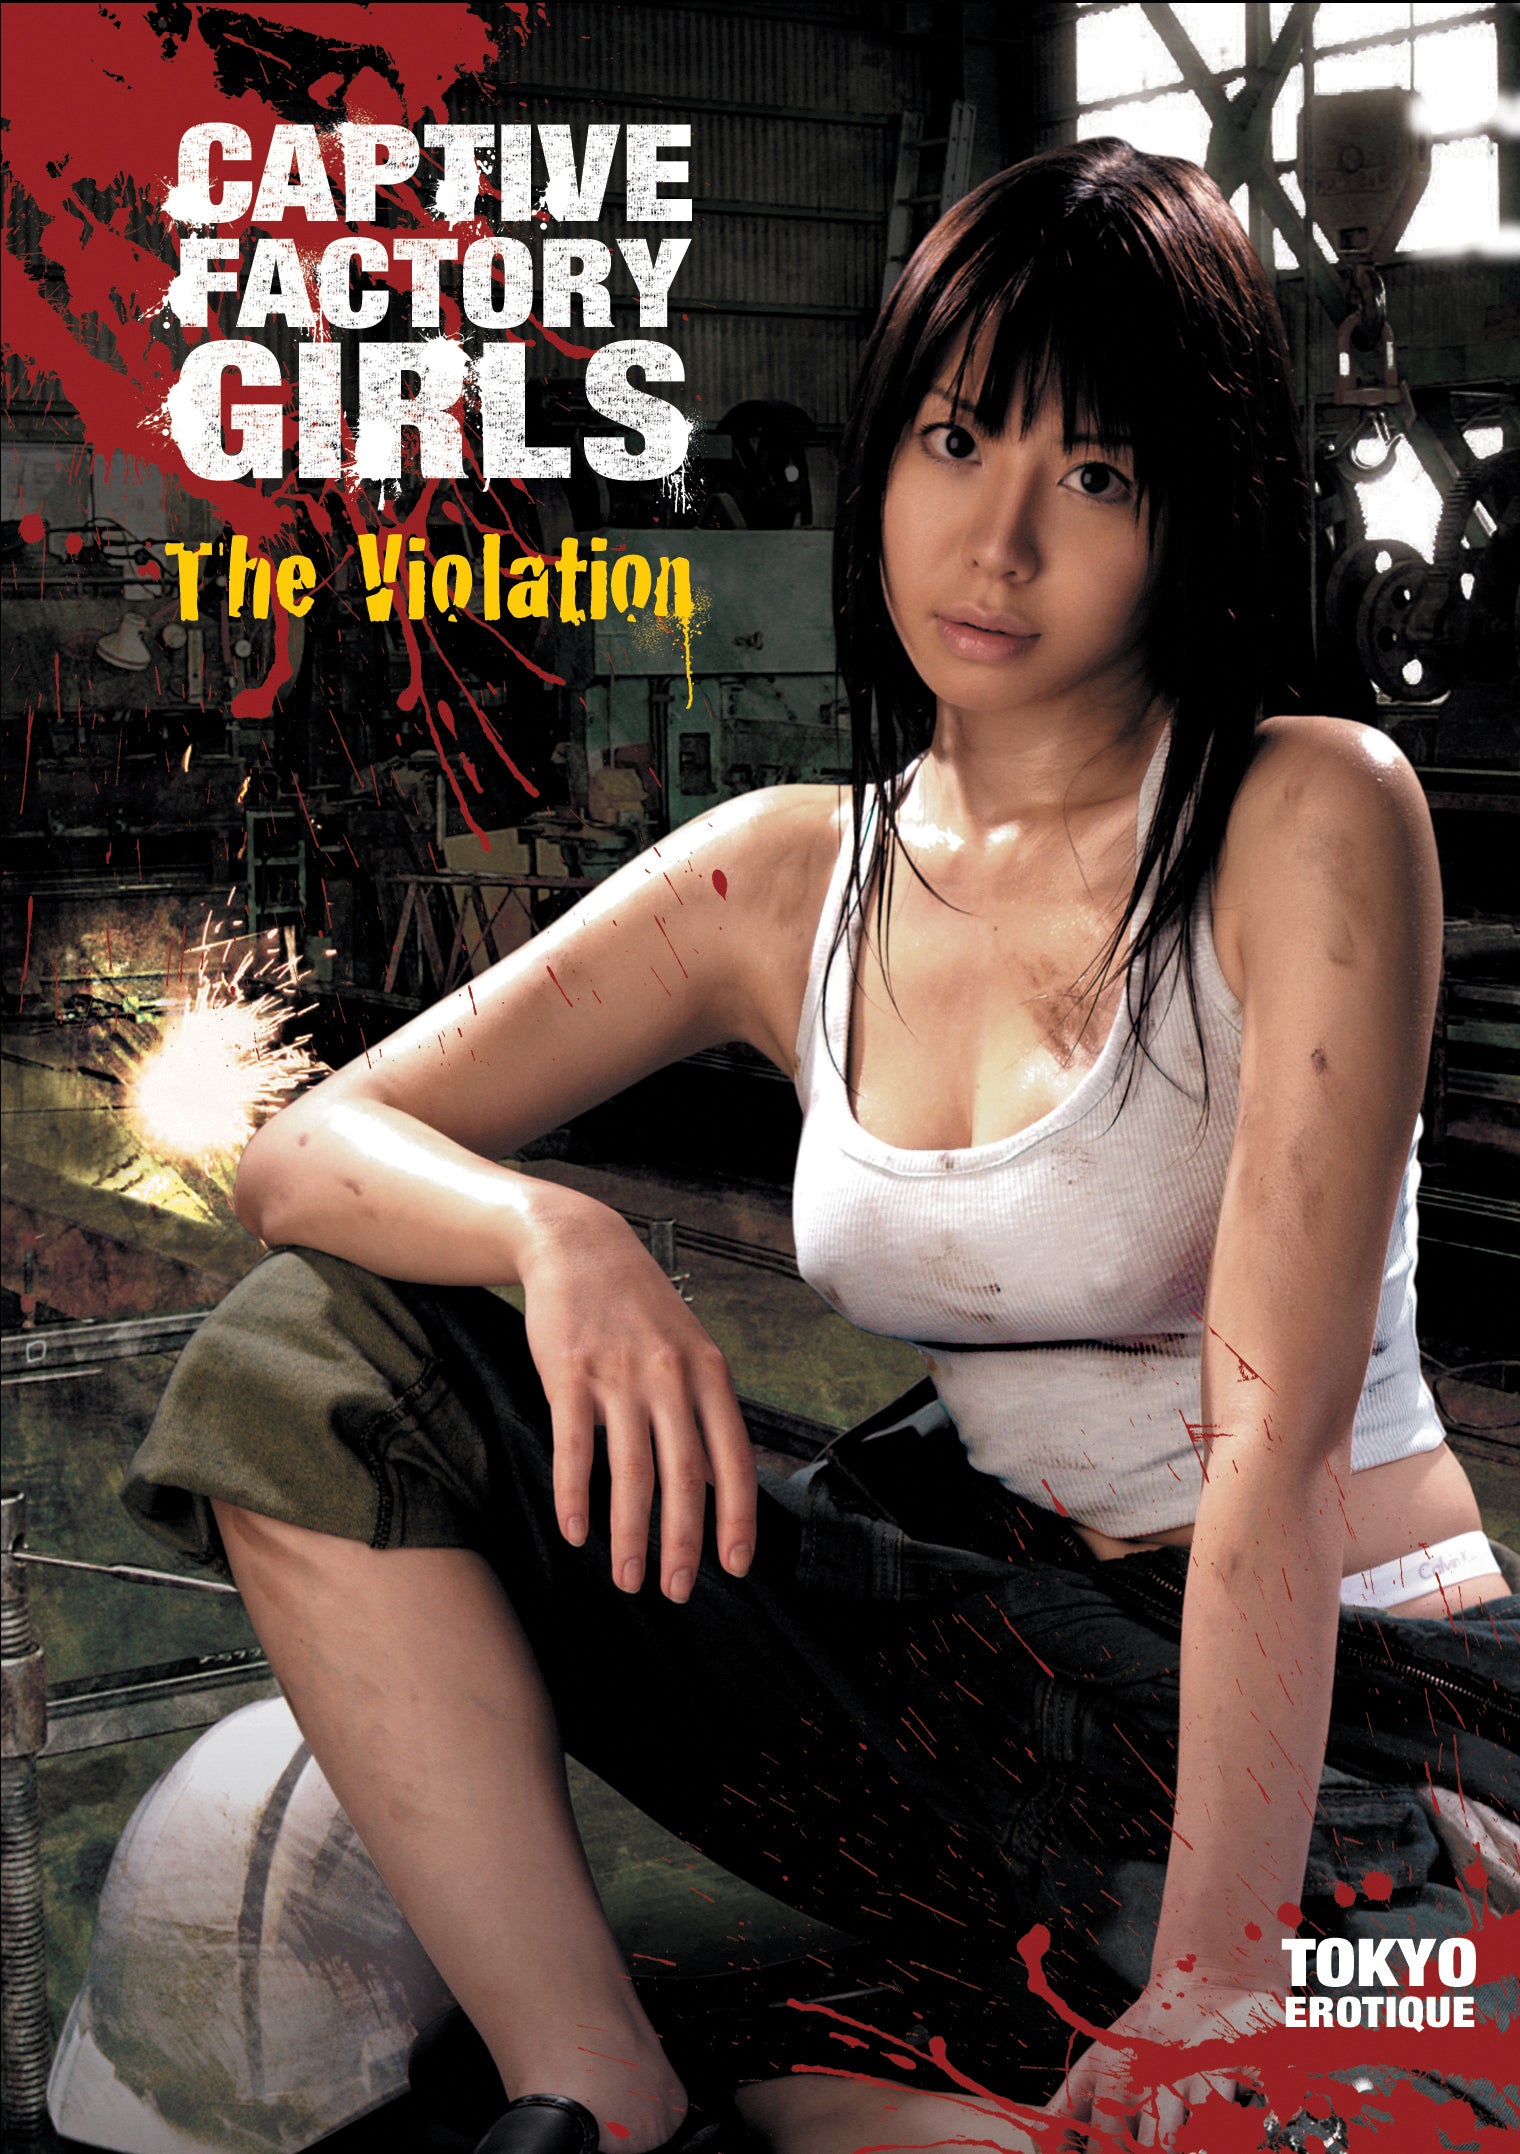 CAPTIVE FACTORY GIRLS: THE VIOLATION DVD